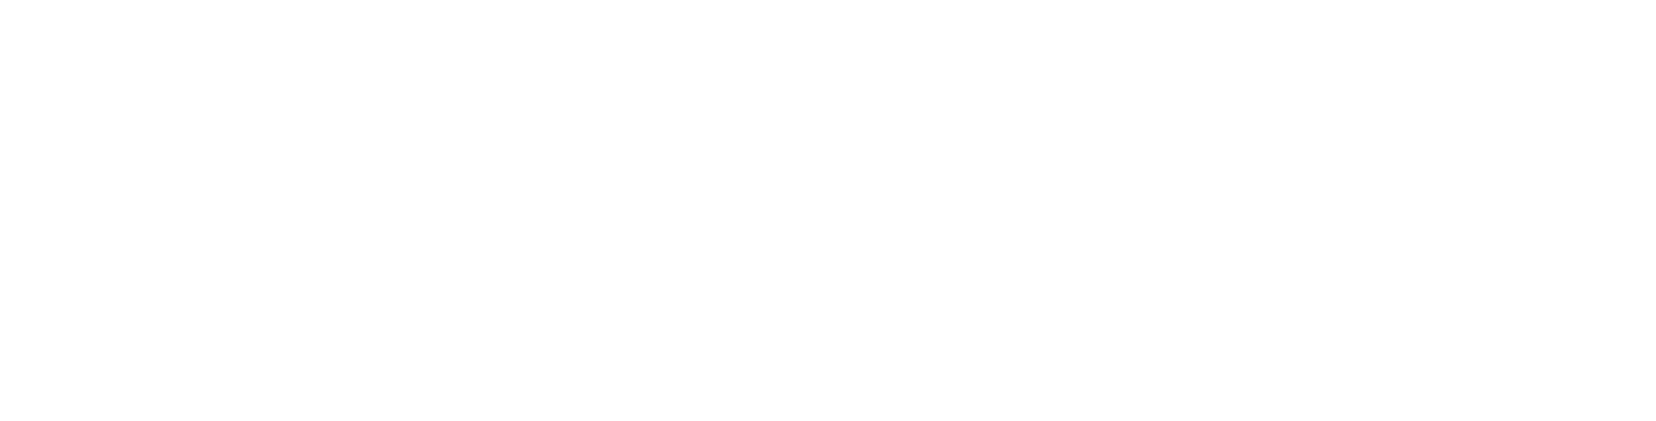 Chongqing Changan logo large for dark backgrounds (transparent PNG)